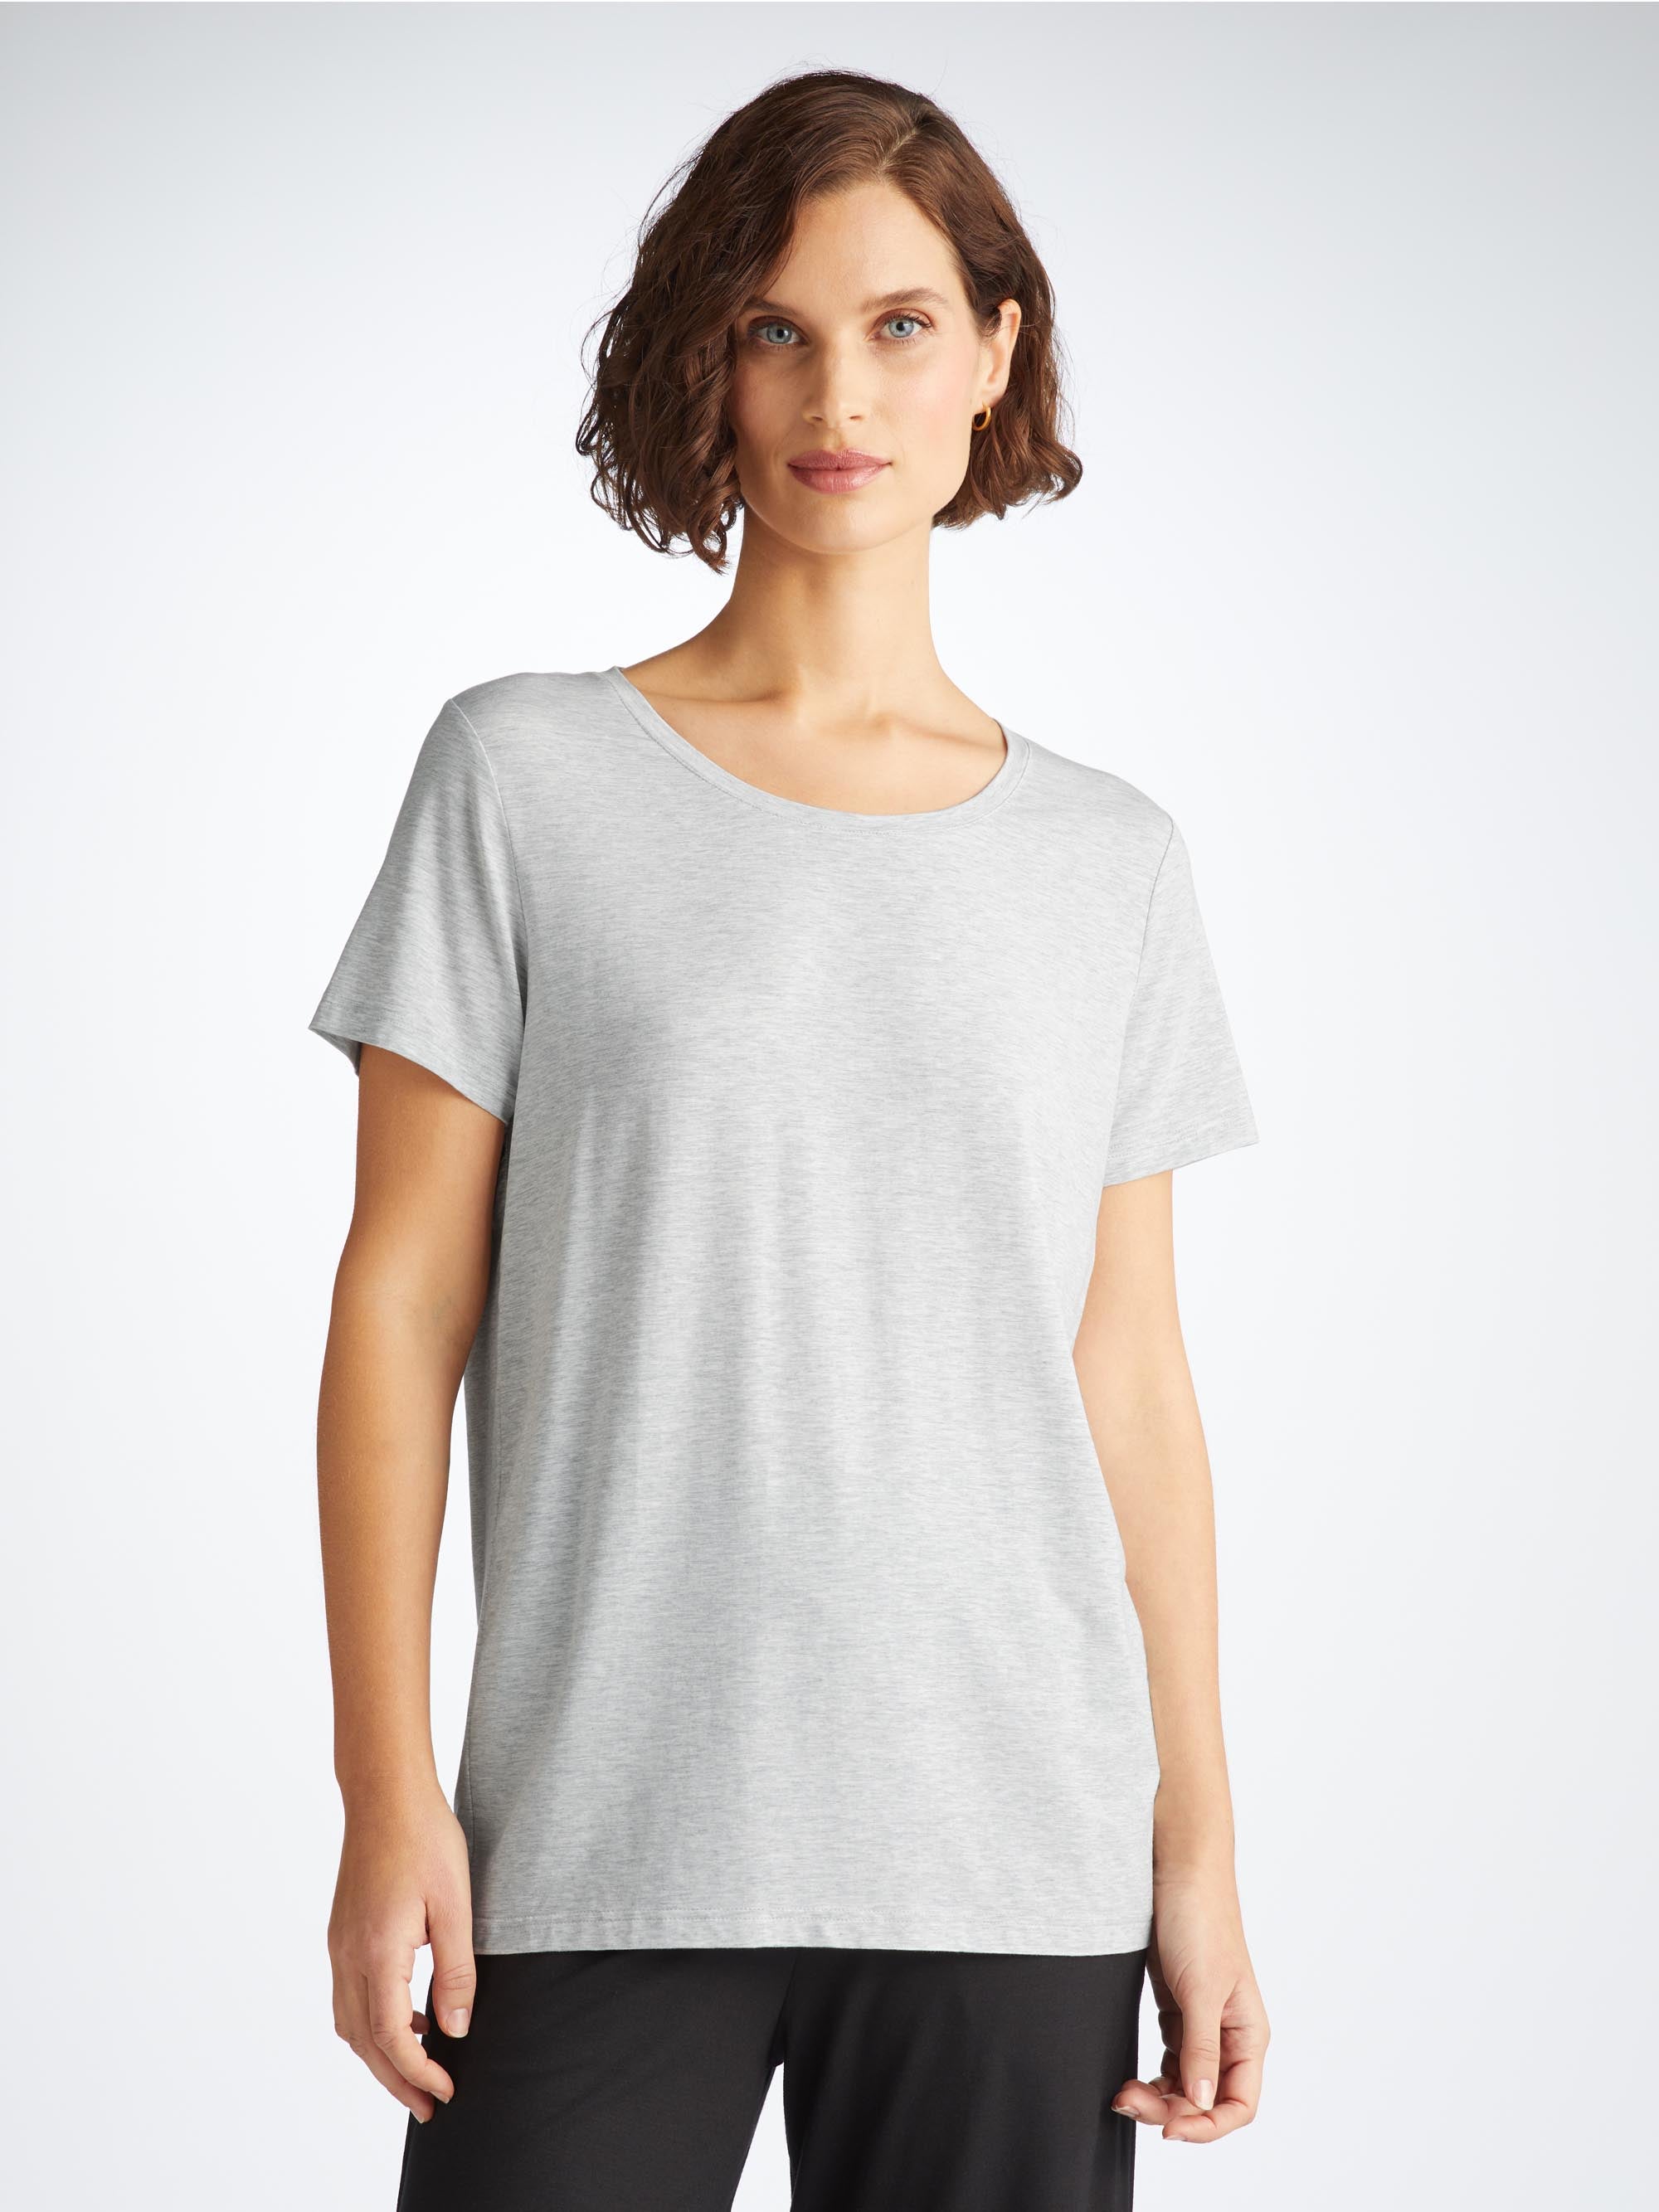 Women's T-Shirt Ethan Micro Modal Stretch Silver